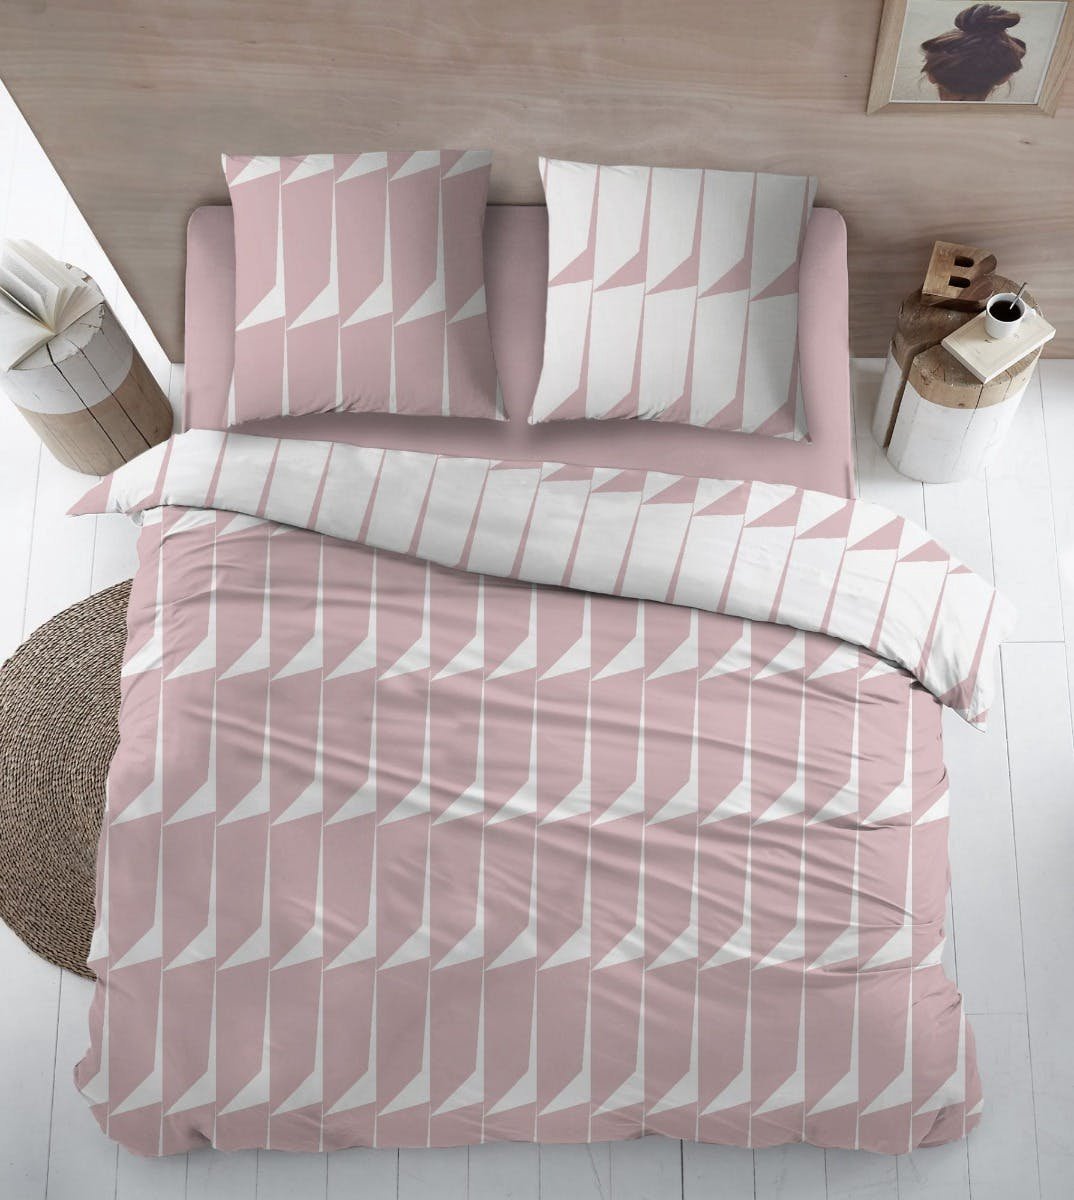 Sleepnight - Katoen Pink, White Print - LP003196 - B 270 x L 220 cm - Lits-jumeaux extra breed - Omkeerbaar